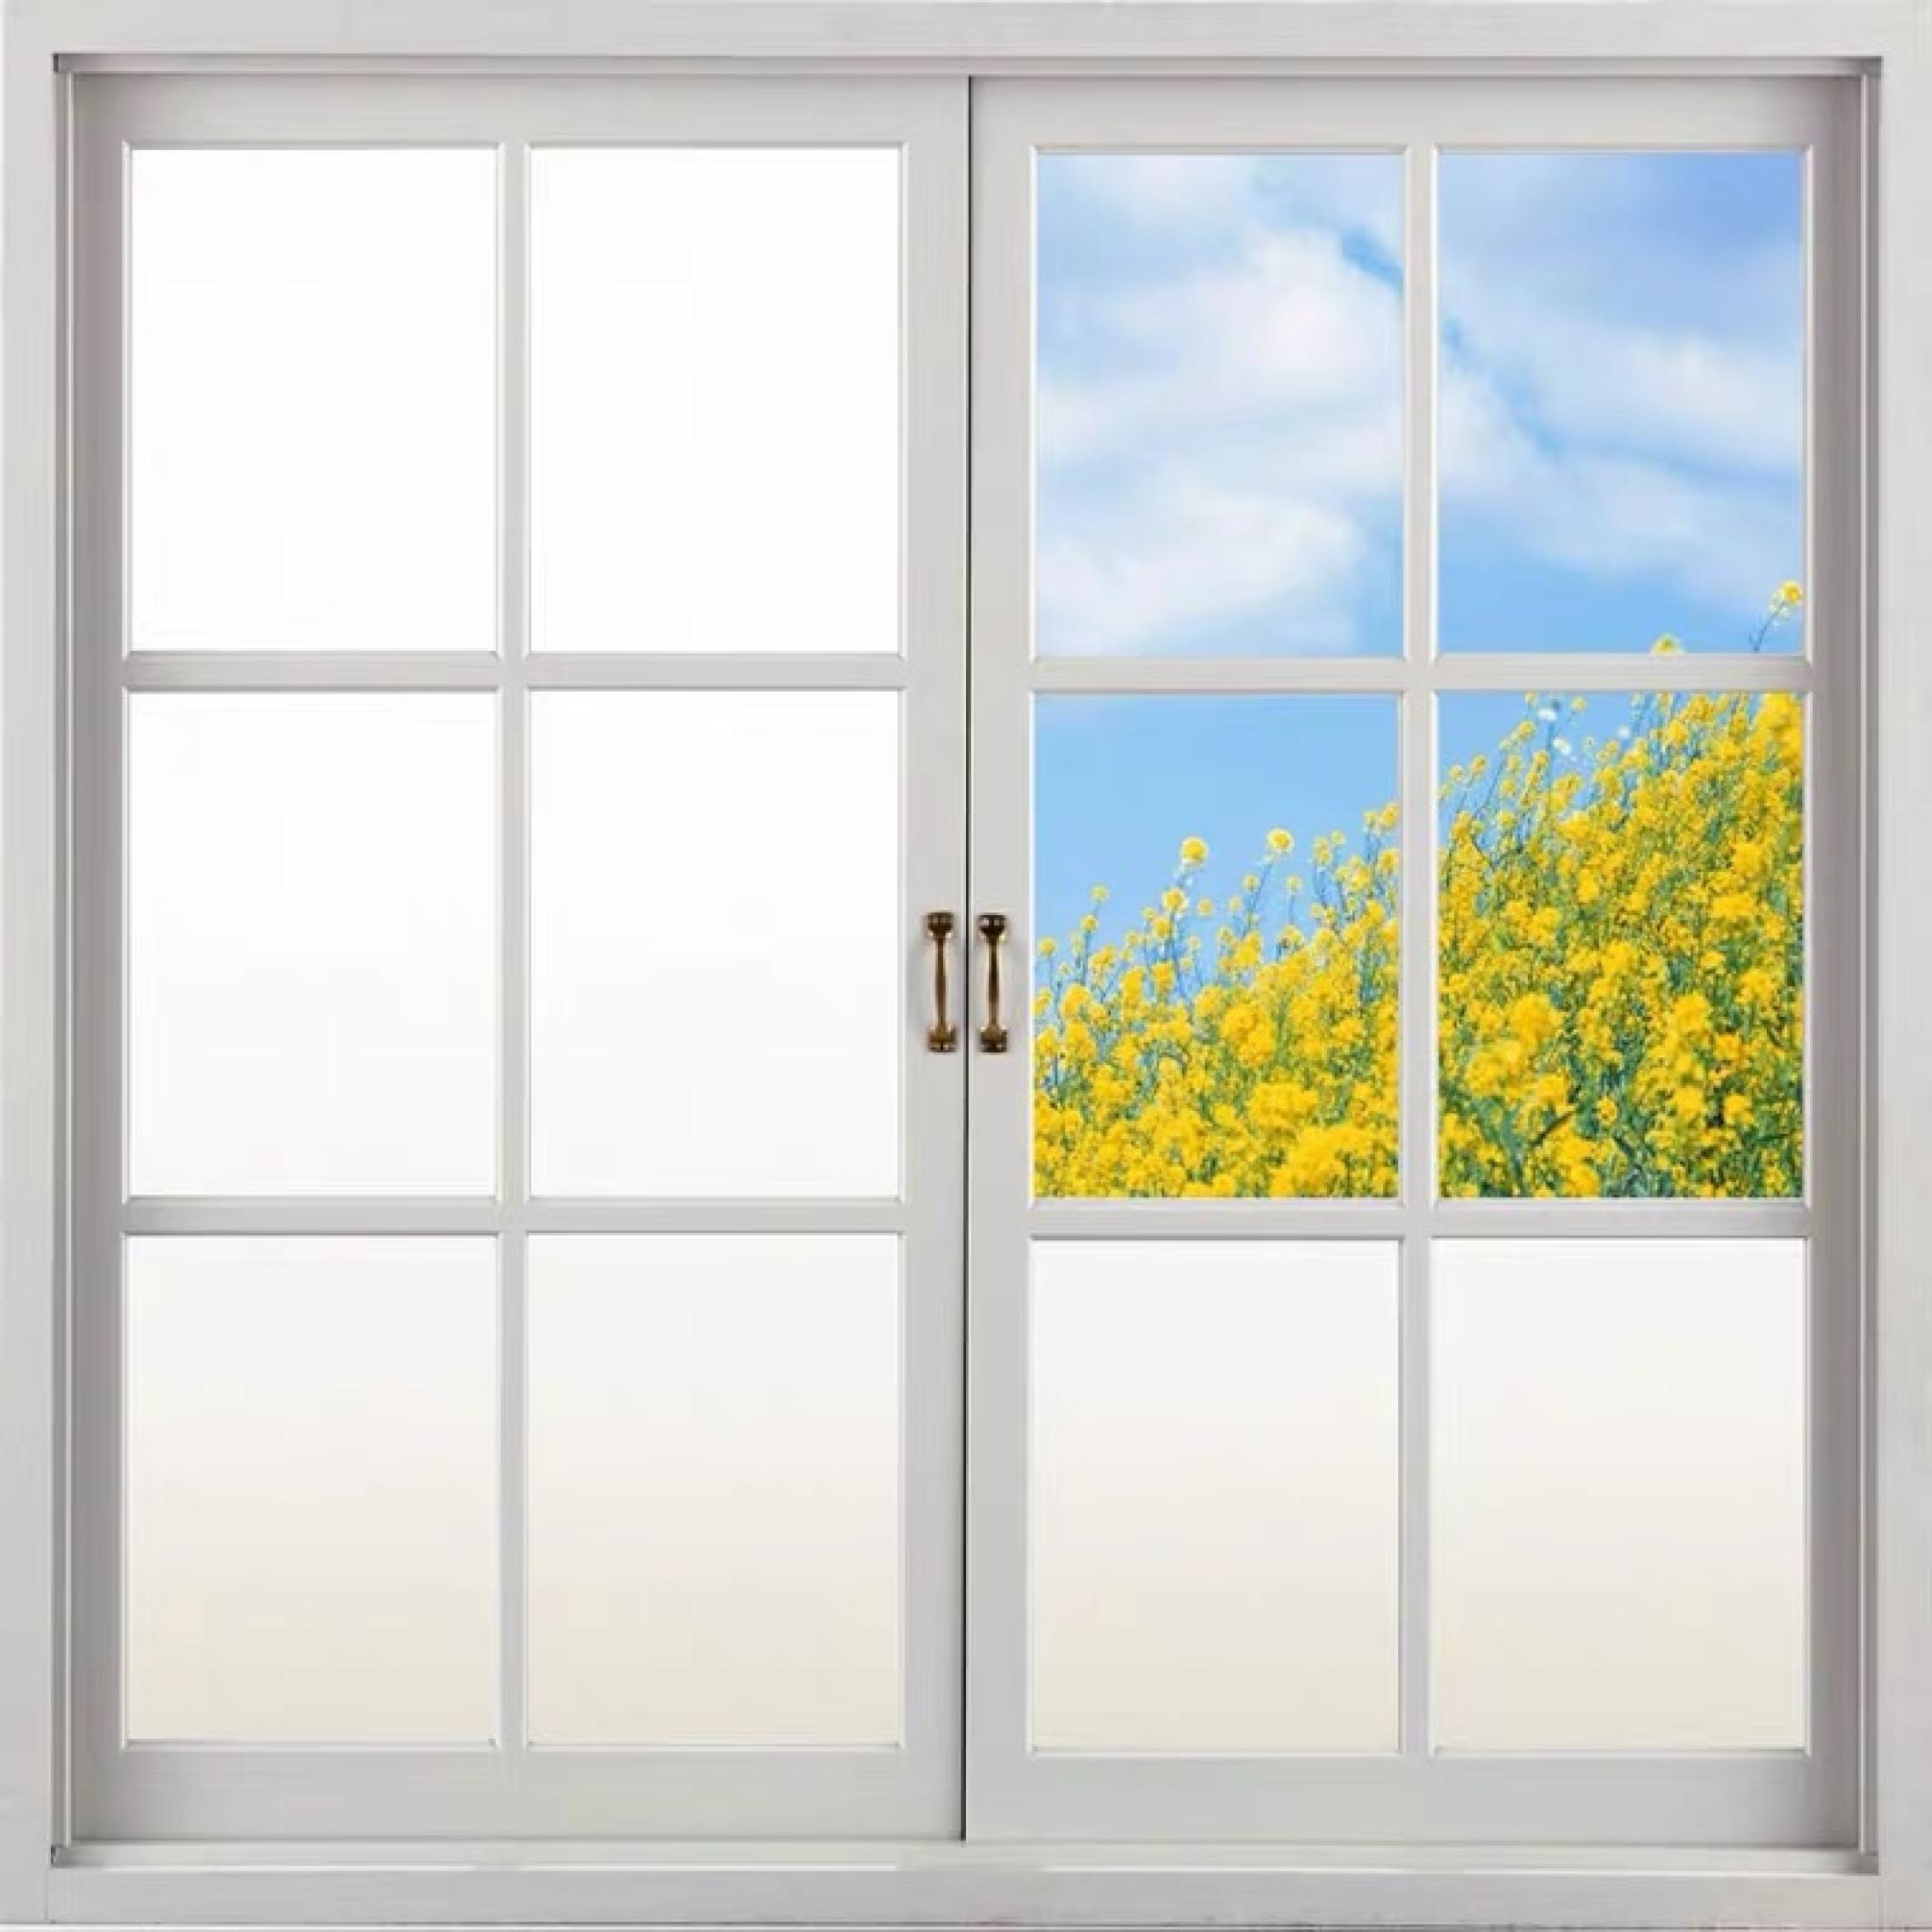 Folie decorativa mata pentru geam, 60 cm x 300 cm, Simple